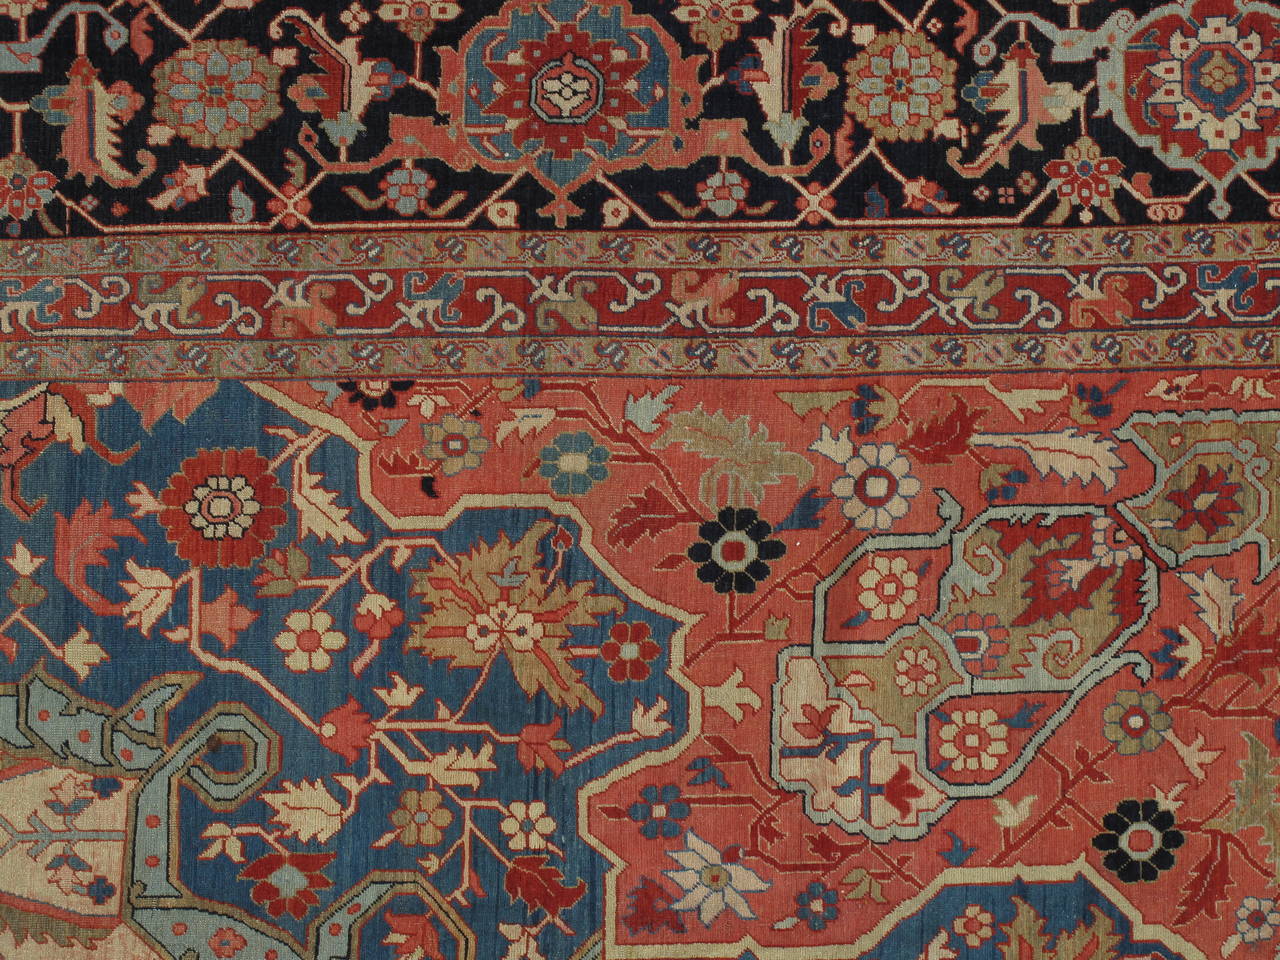 19th Century Antique Persian Serapi Carpet, Handmade Wool Oriental Rug, Ivory and Light Blue